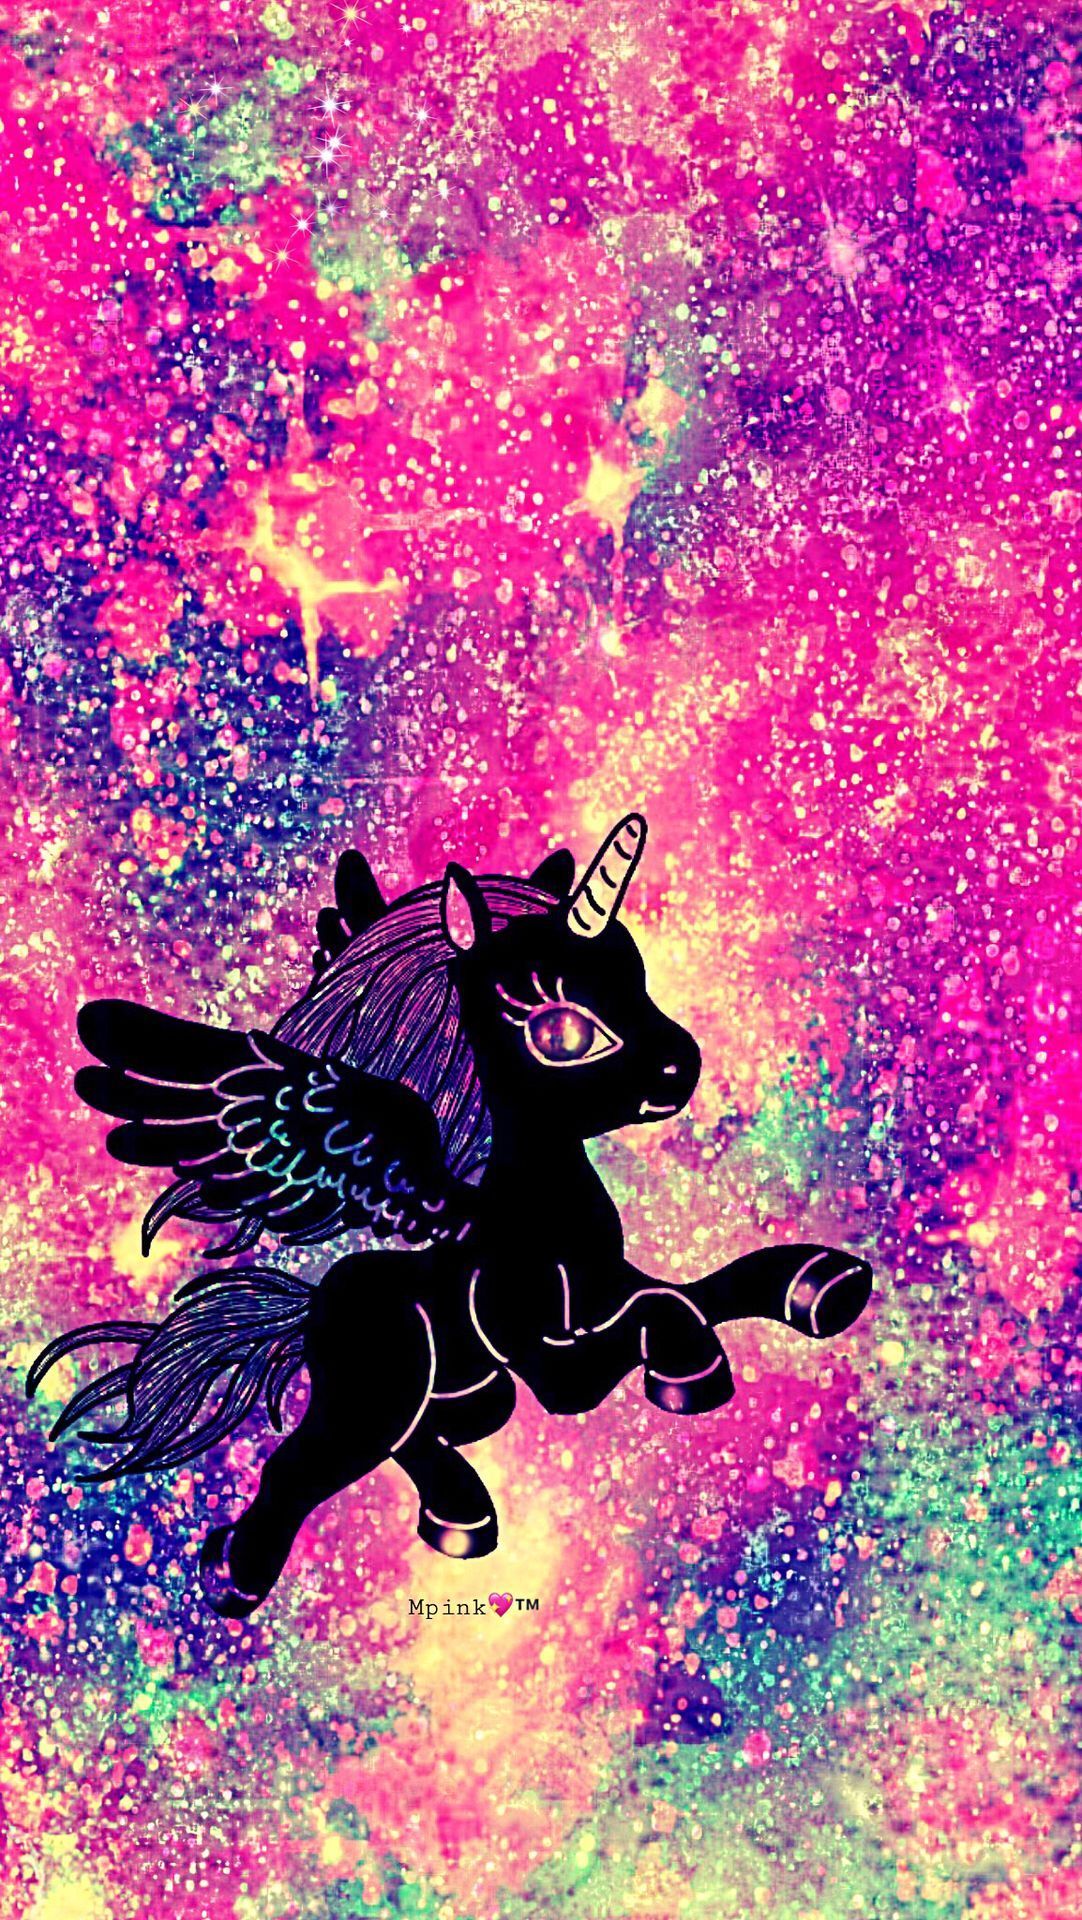 Rainbow Unicorn Galaxy Wallpaper #androidwallpaper #iphonewallpaper # wallpaper #galaxy #sparkle #glitter. Unicorn wallpaper, Galaxy wallpaper, Sparkle wallpaper